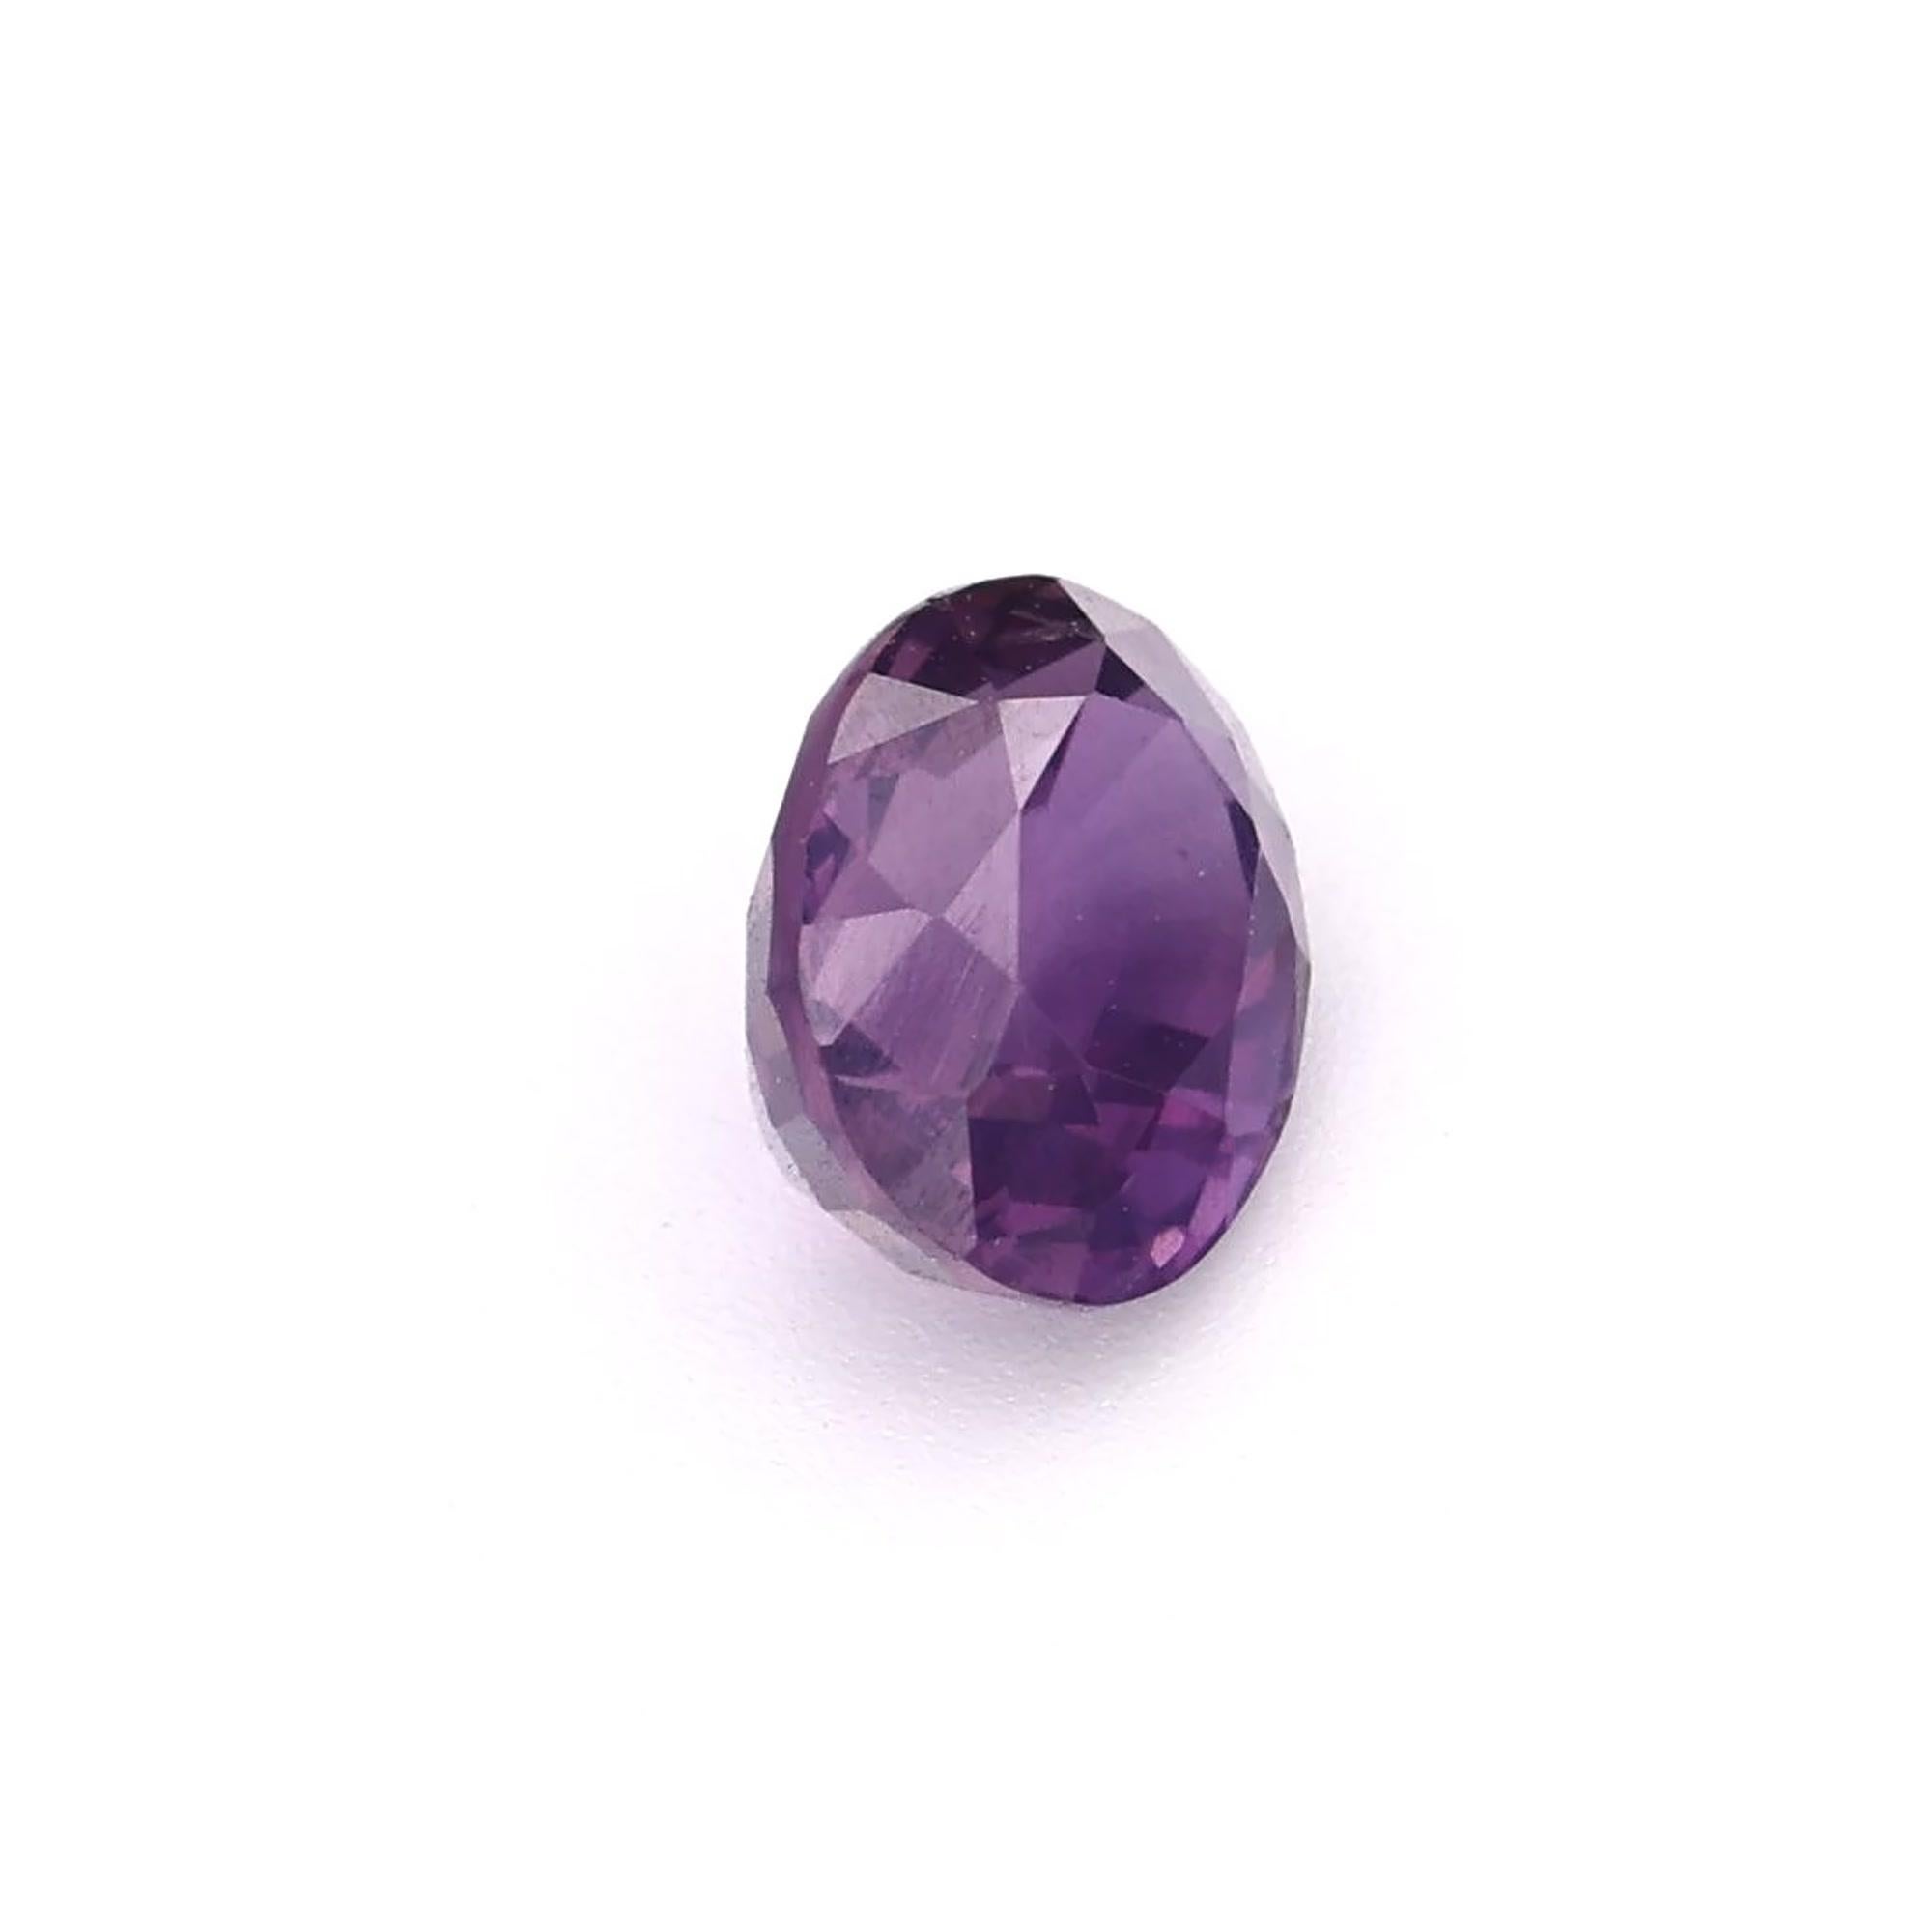 Pierre d'origine de Ceylan, saphir violet de forme ovale certifié 1,35 carat en vente 4